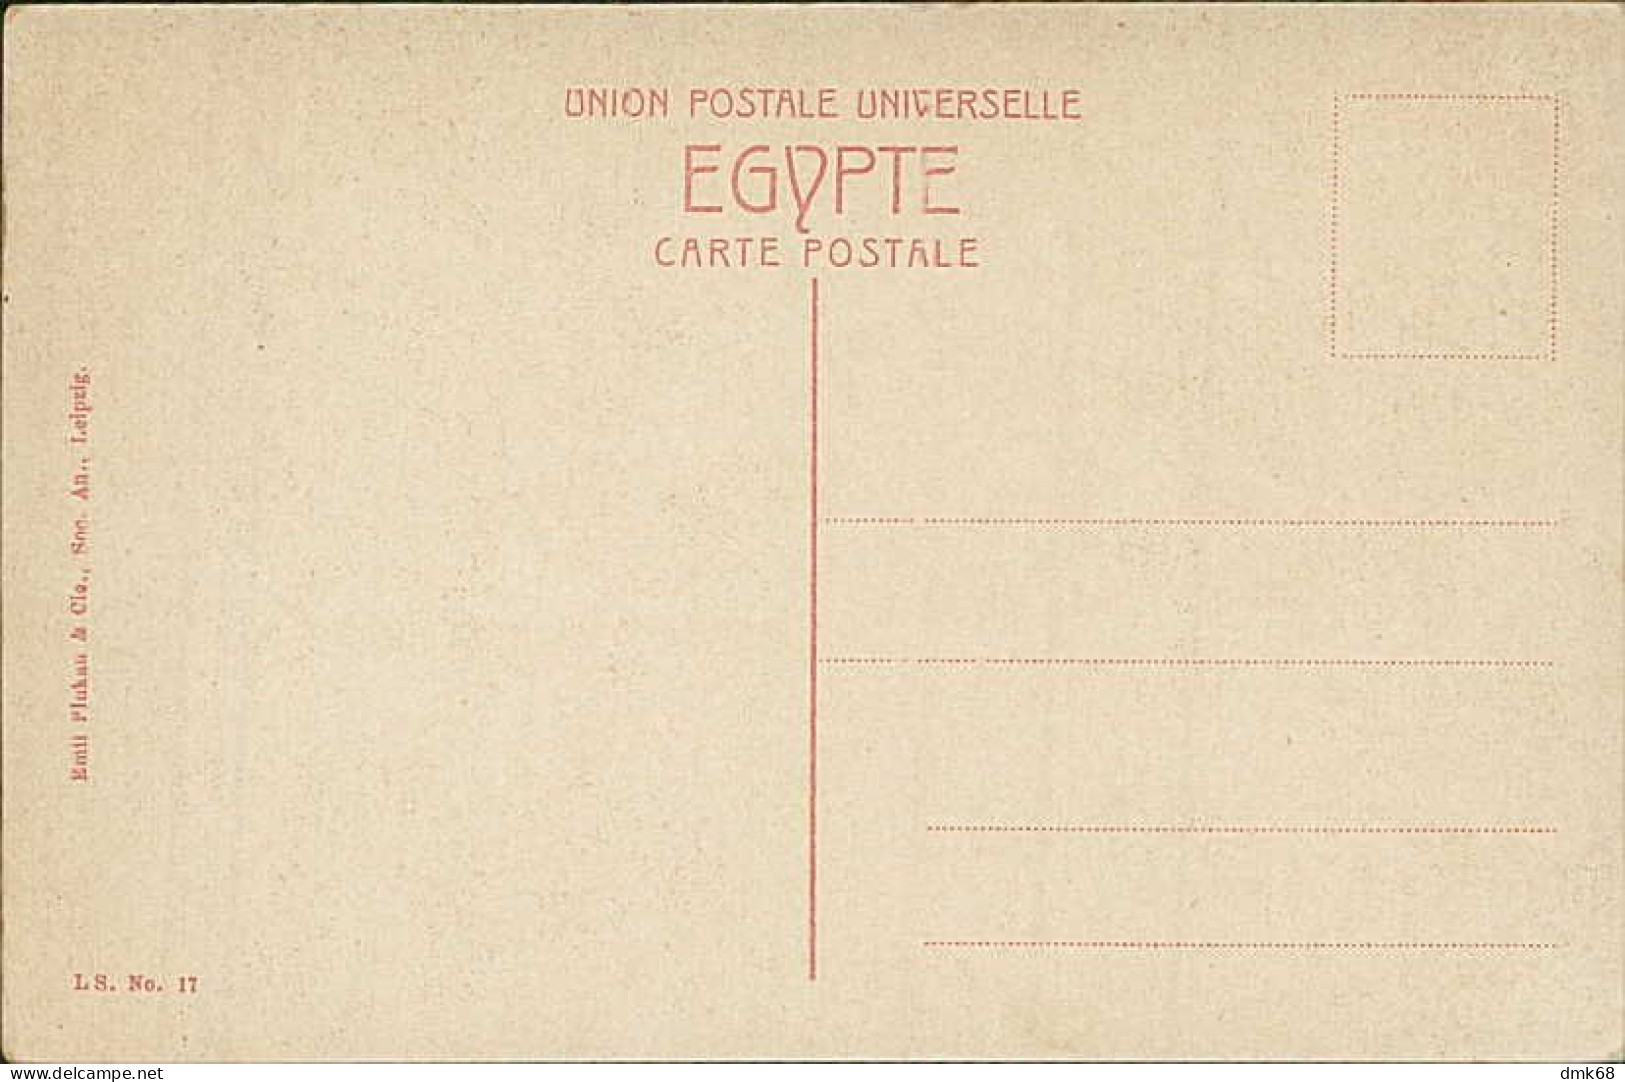 EGYPT - ALEXANDRIA / ALEXANDRIE - ECOLE PROFESSIONNELLE ORWAH-EL-WOSKA - EDIT EMIL PINKAU & CIE - 1910s (12640) - Alexandria